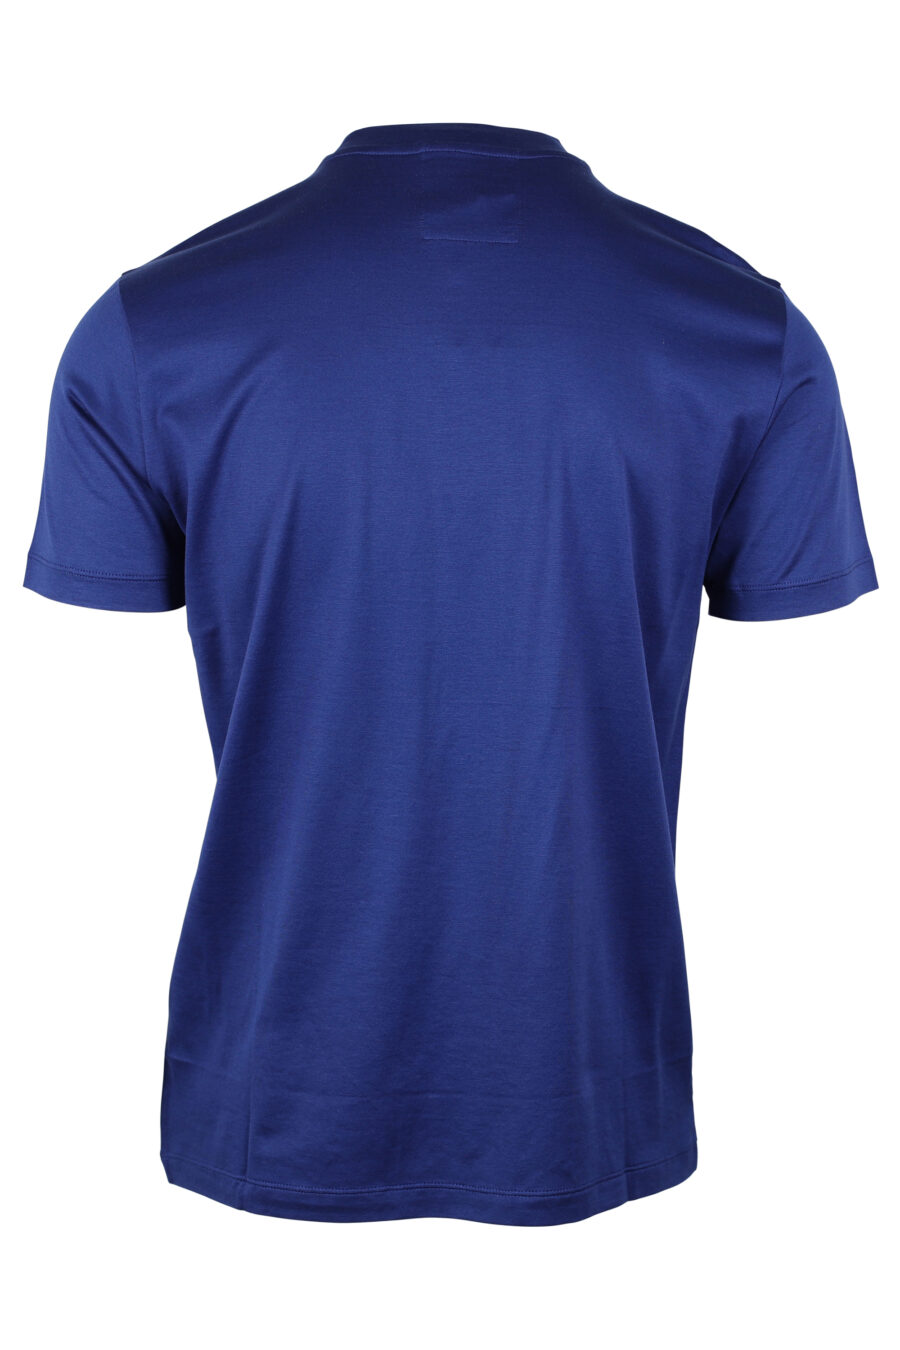 Camiseta azul con minilogo blanco - IMG 4666